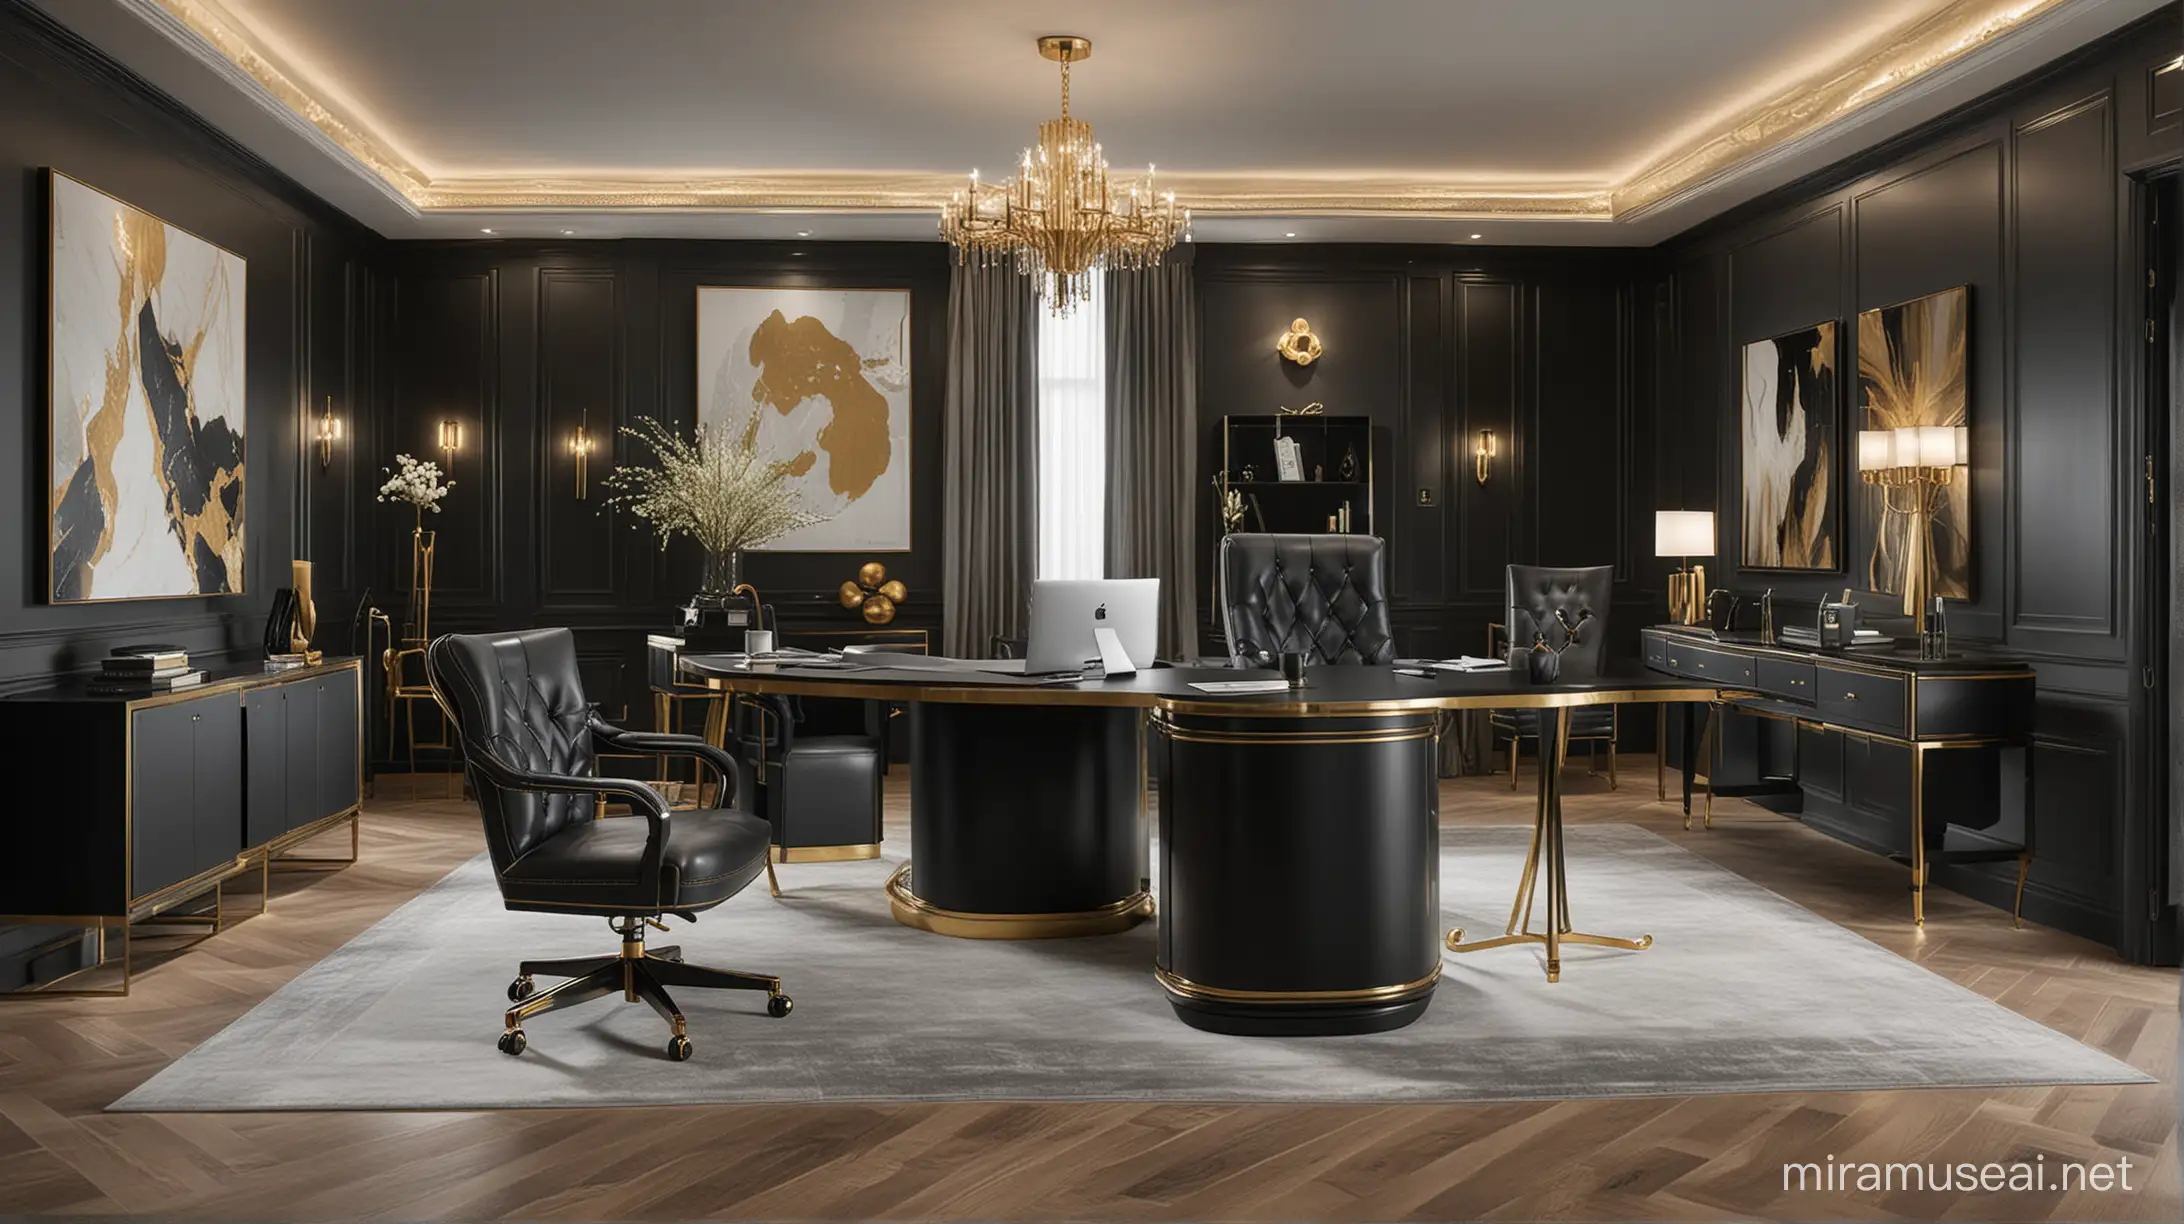 Elegant Black and Gold Workspace with Premium Amenities